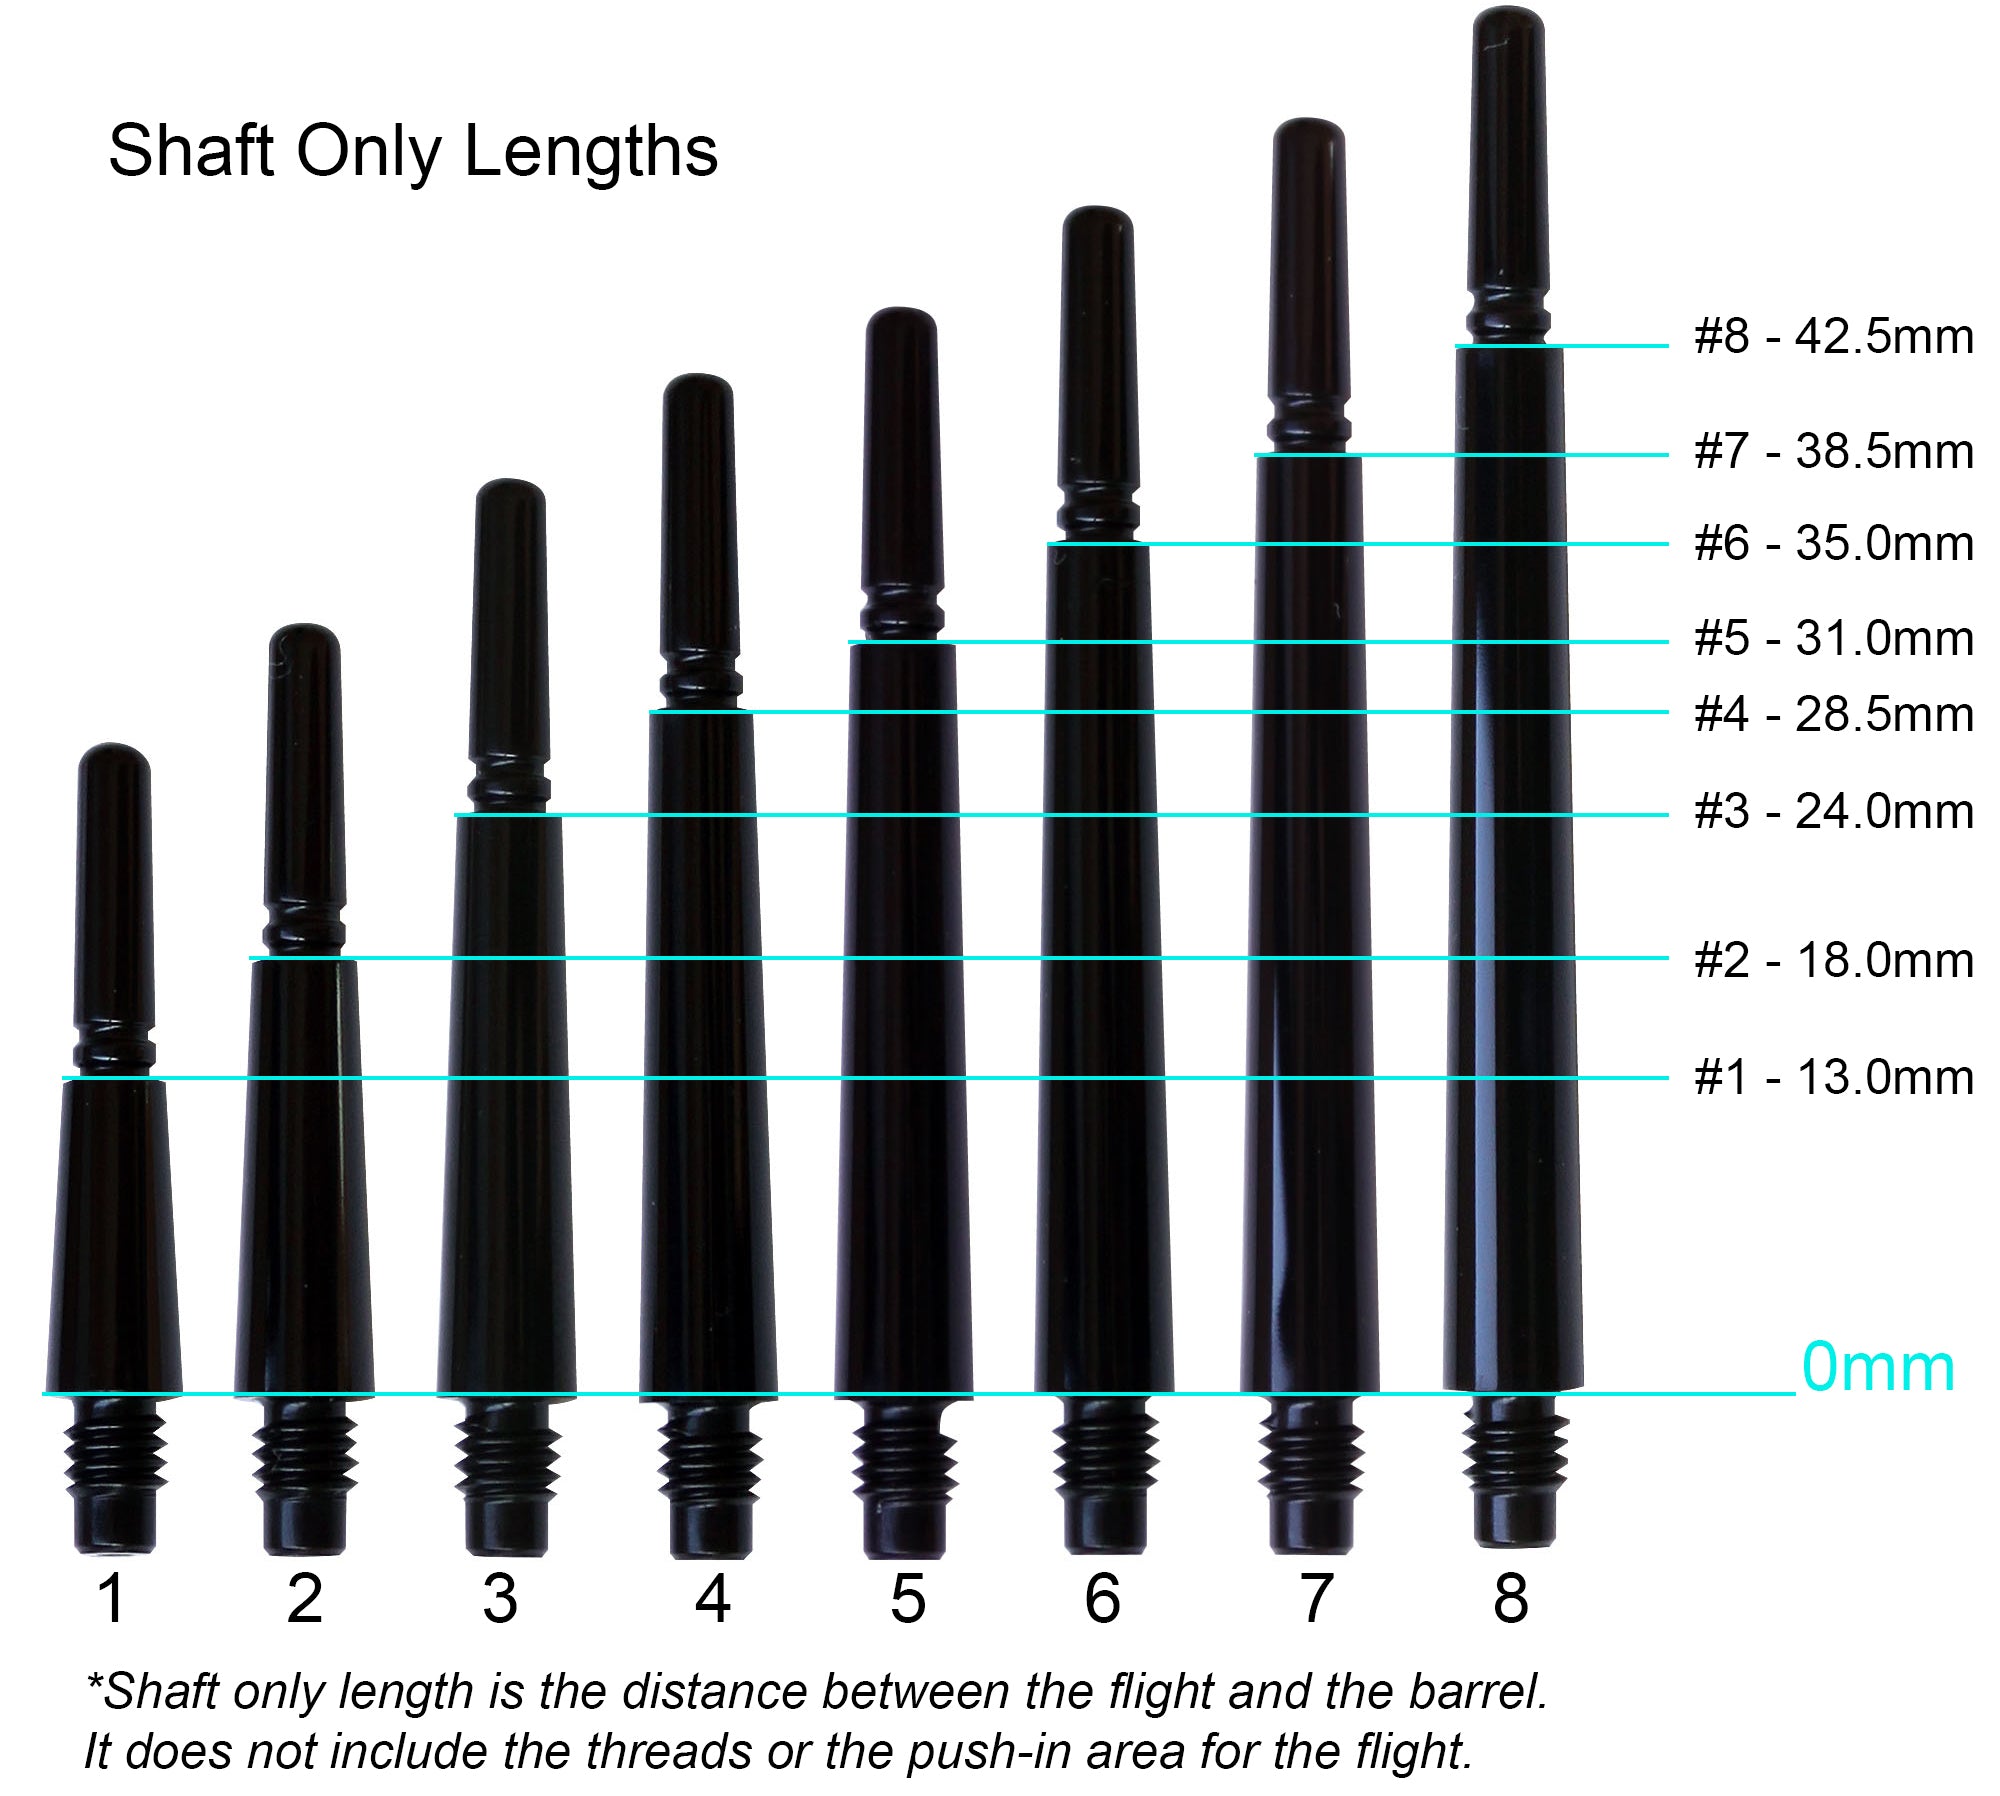 Fit Flight Gear Slim Spinning Dart Shafts - Super X-Short #1 (13.0mm) Clear